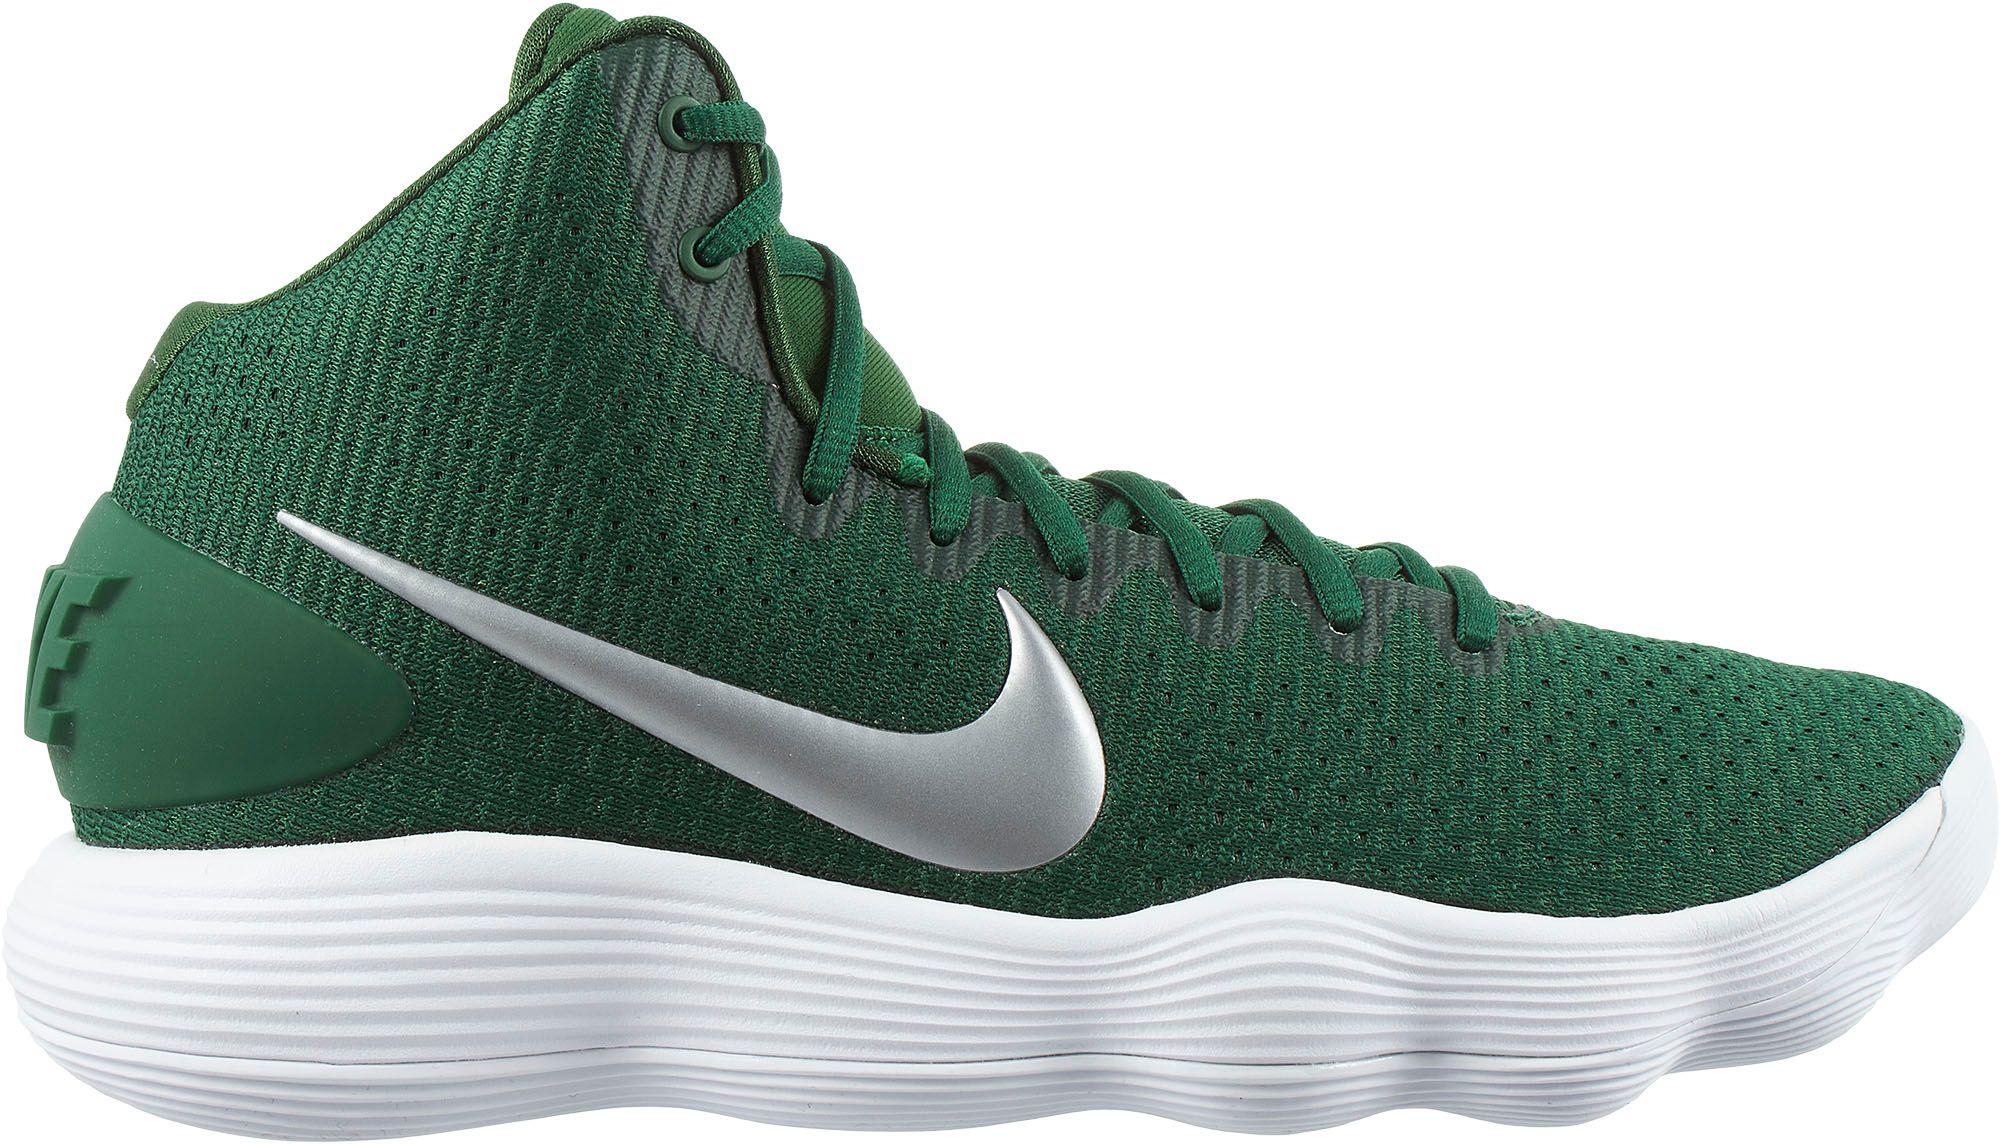 Nike Rubber Hyperdunk Tb 2017 Green Basketball Shoe 897807 300 Size 8.5 for Men - Lyst